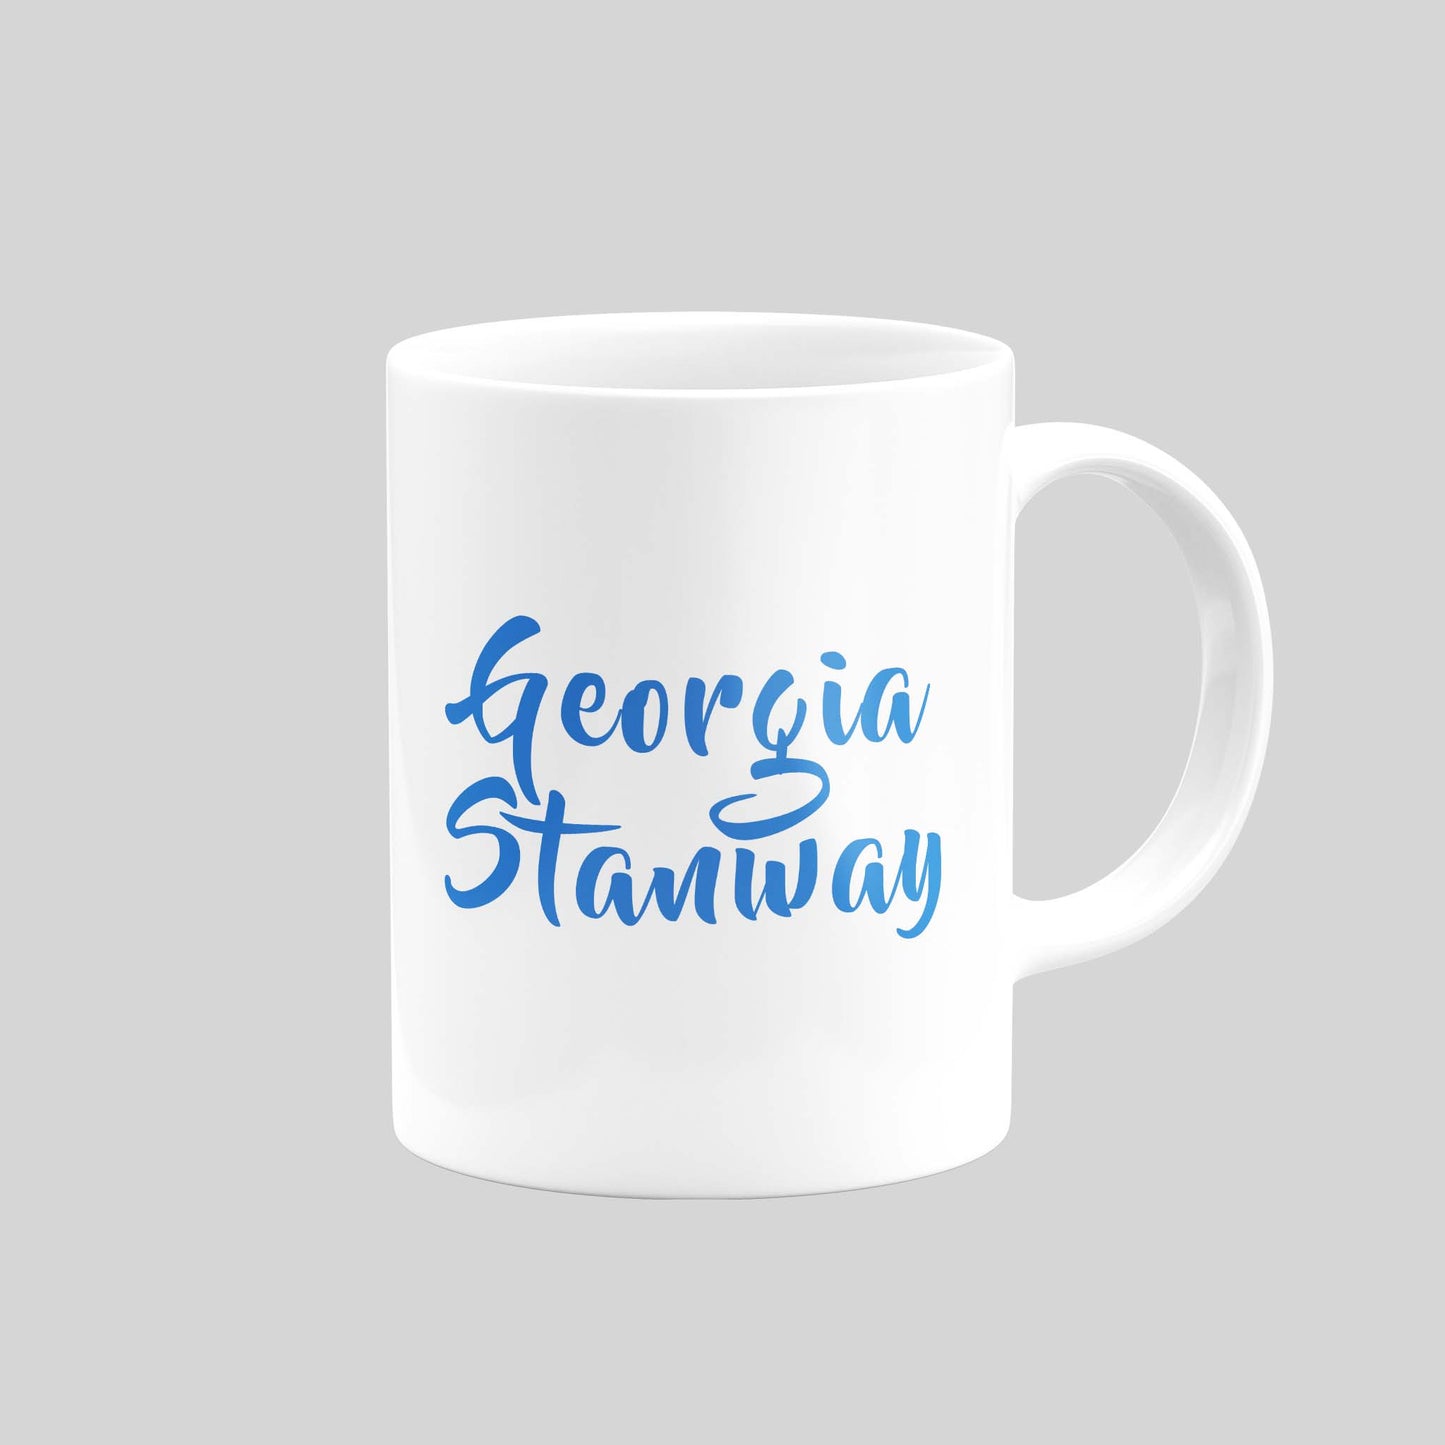 Georgia Stanway Mug